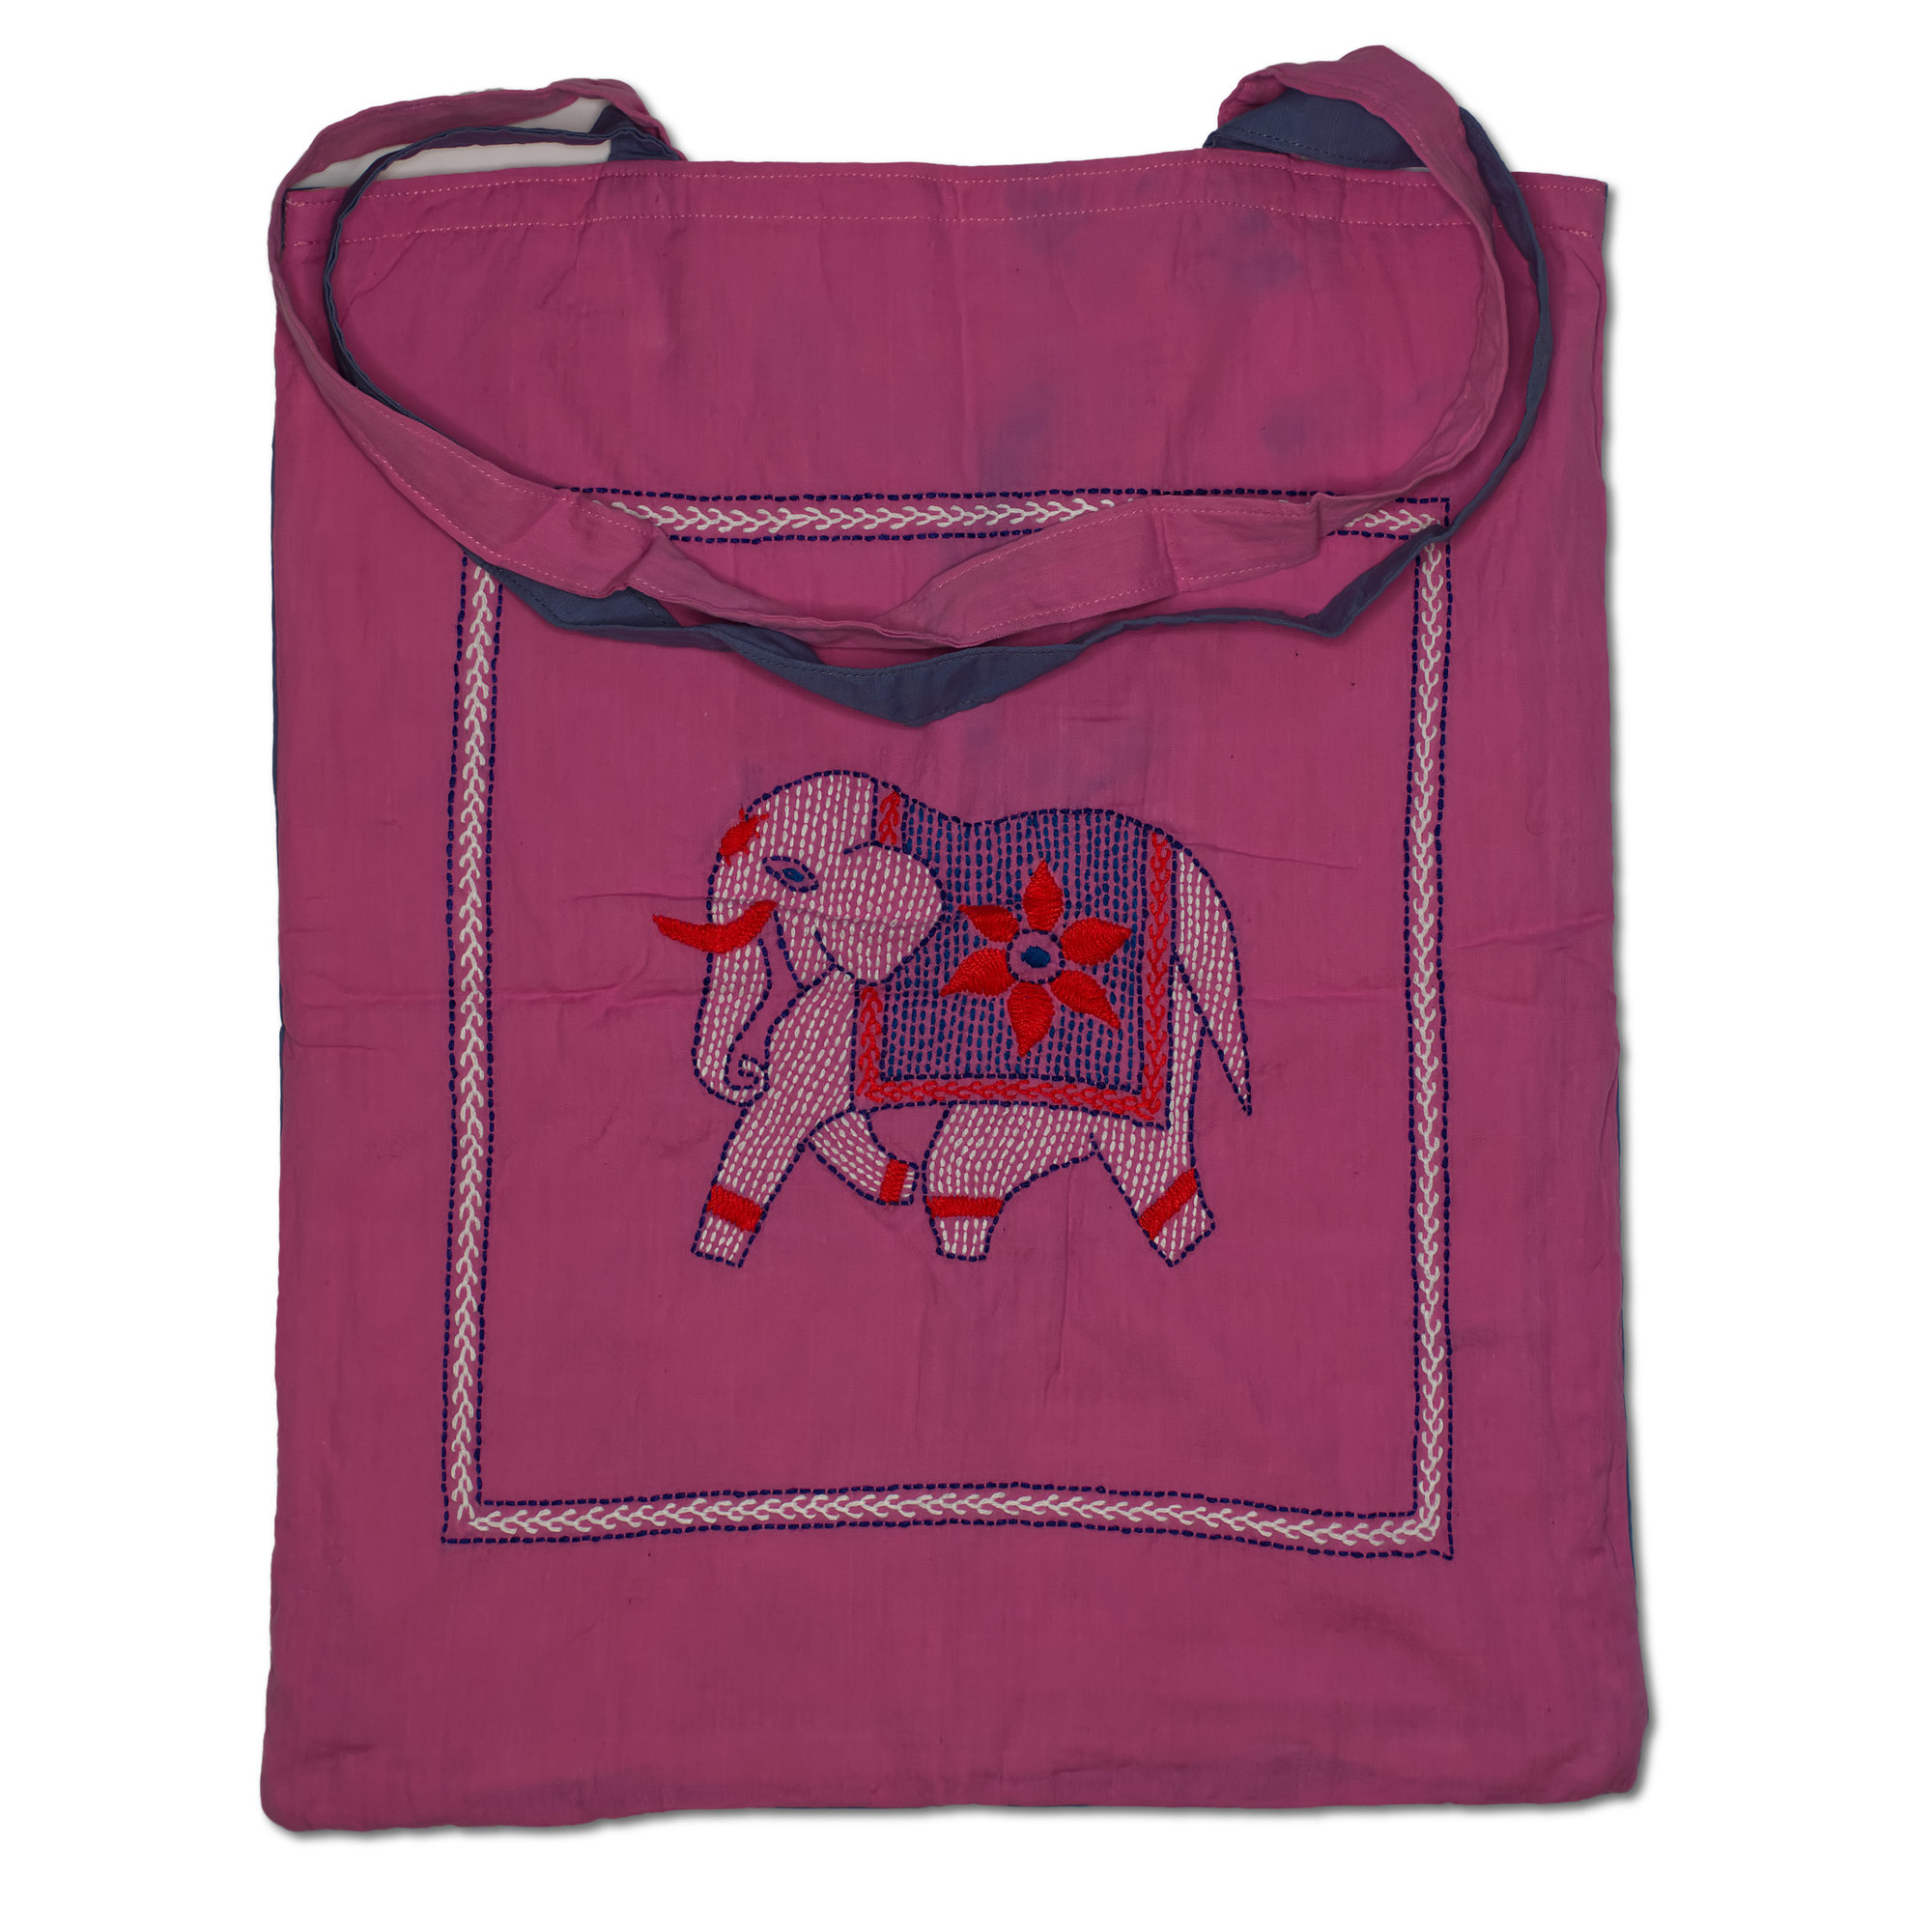 Tote Bag - Dinajpur (elephant) Design In Sneya (grey) And Shopna (pink)